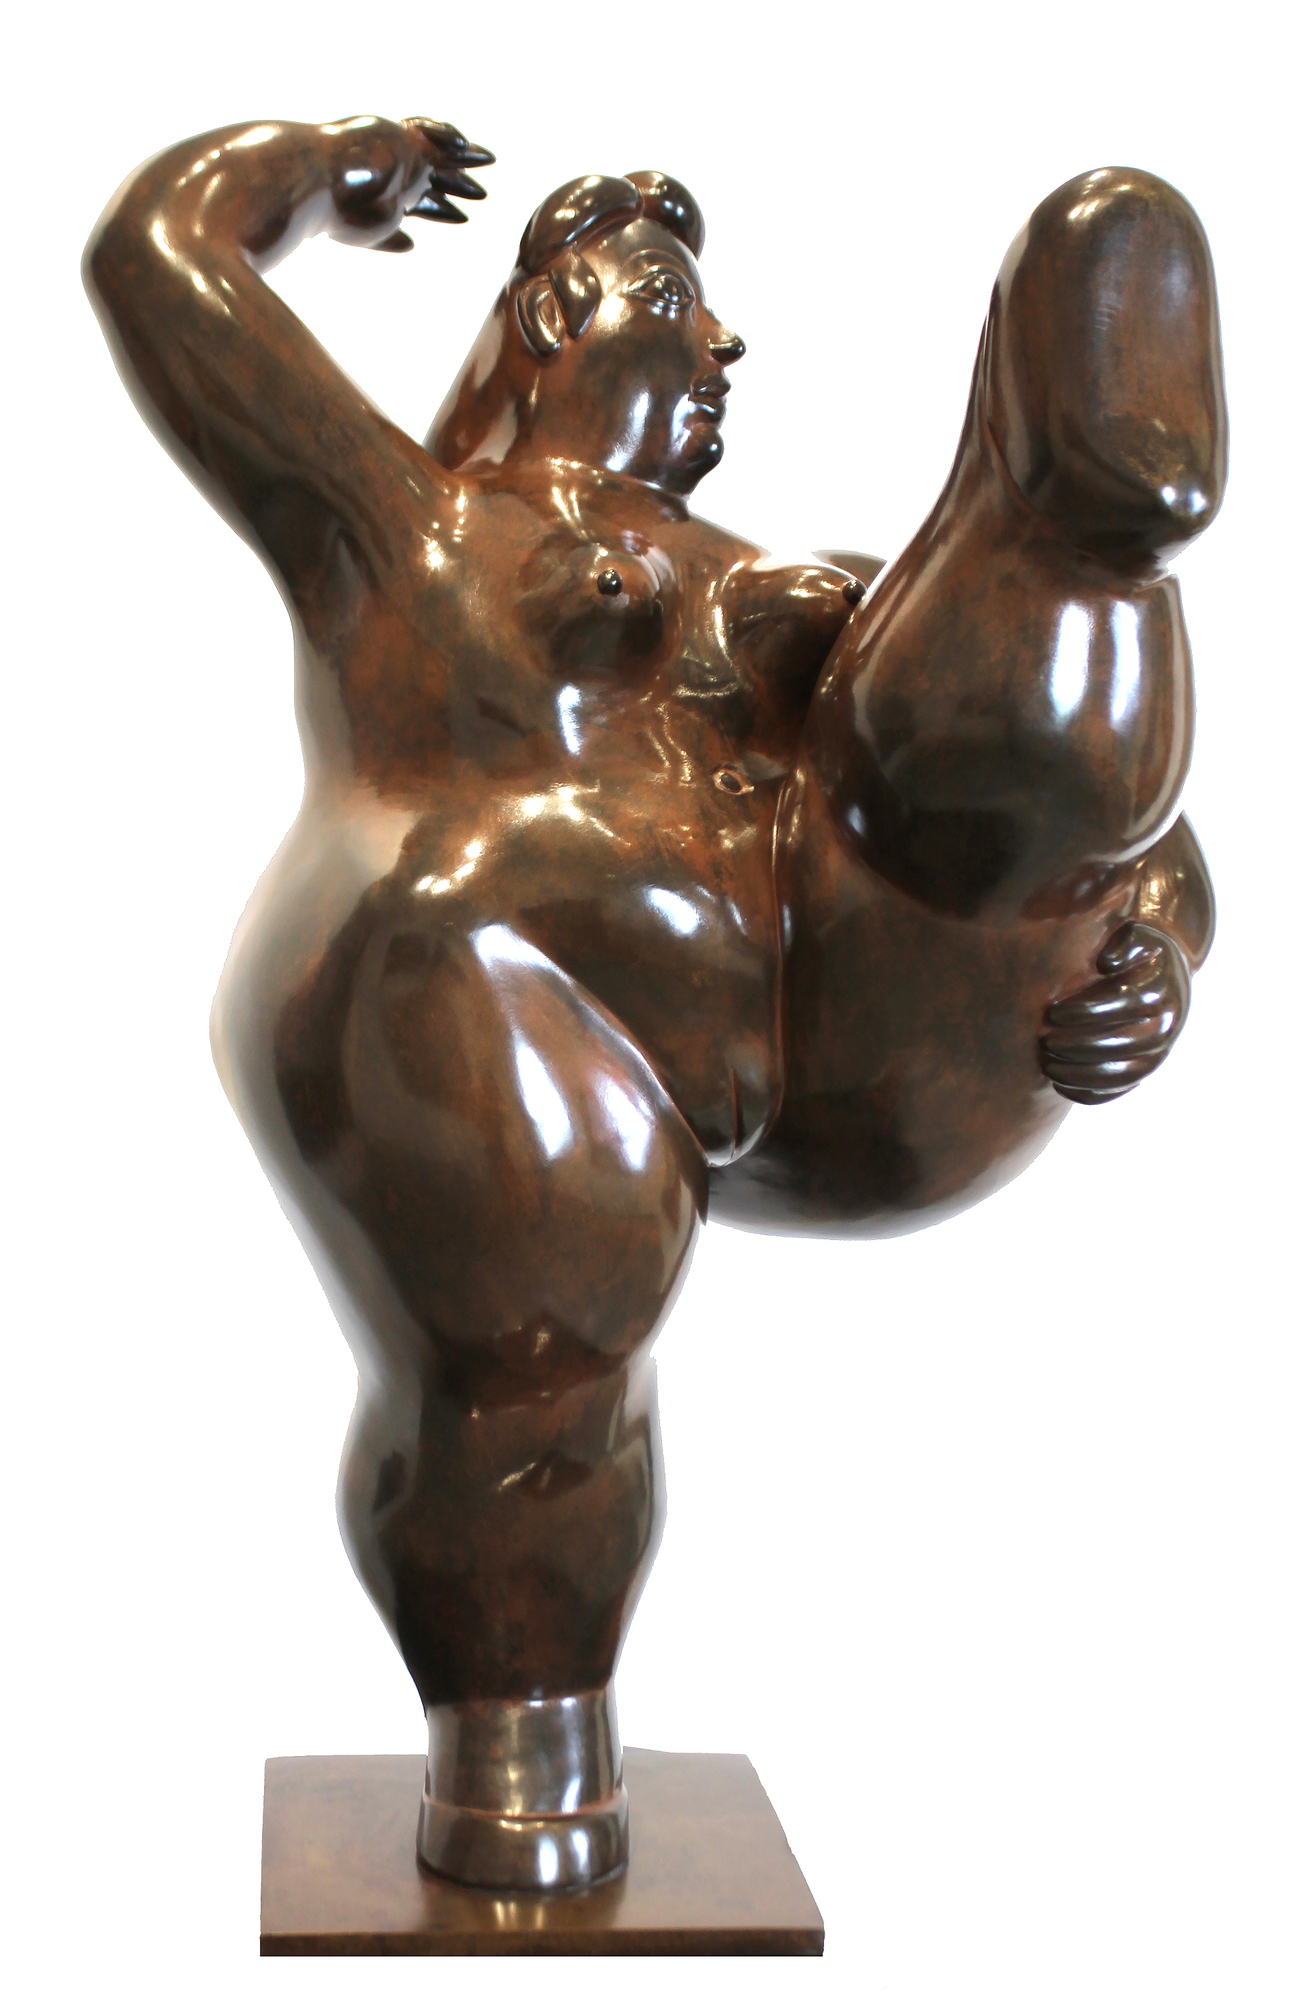 FERNANDO BOTERO - Ballerina - bronze - 41 x 24 x 24 in.